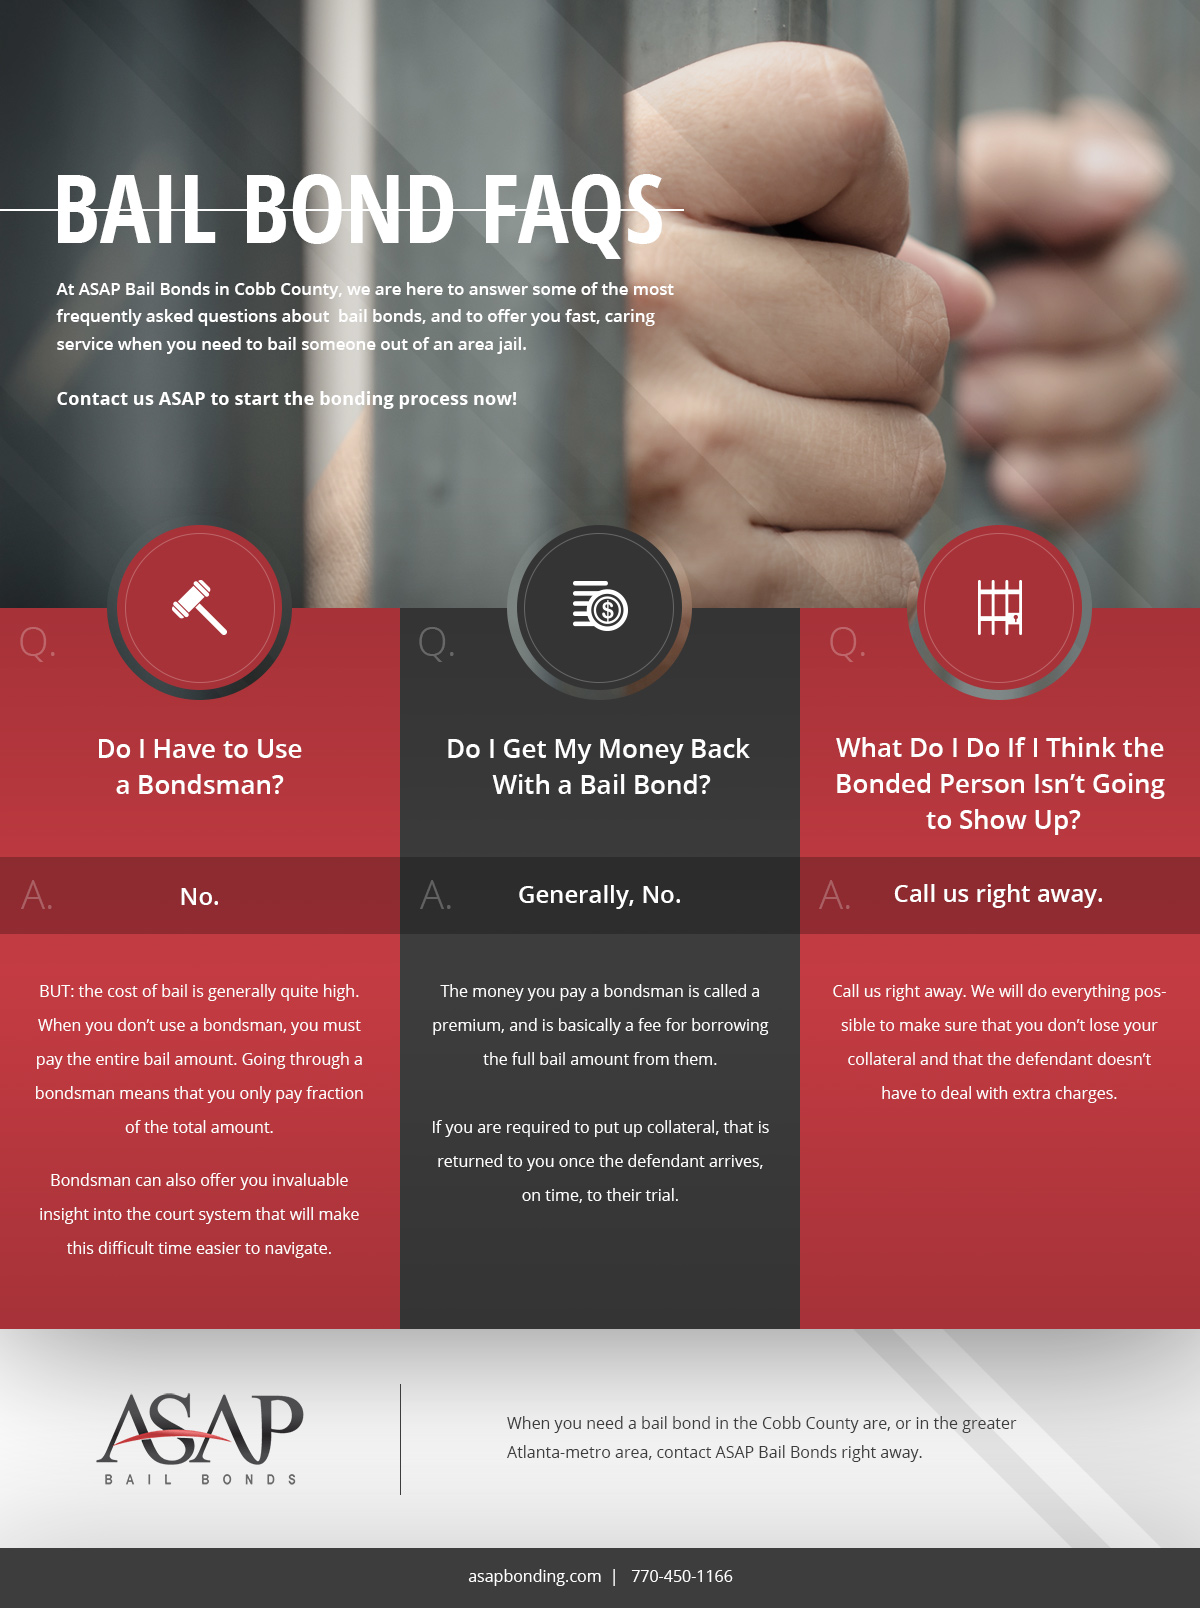 Asap-Bail-Bonds-Infographic-5a4d5776b509e